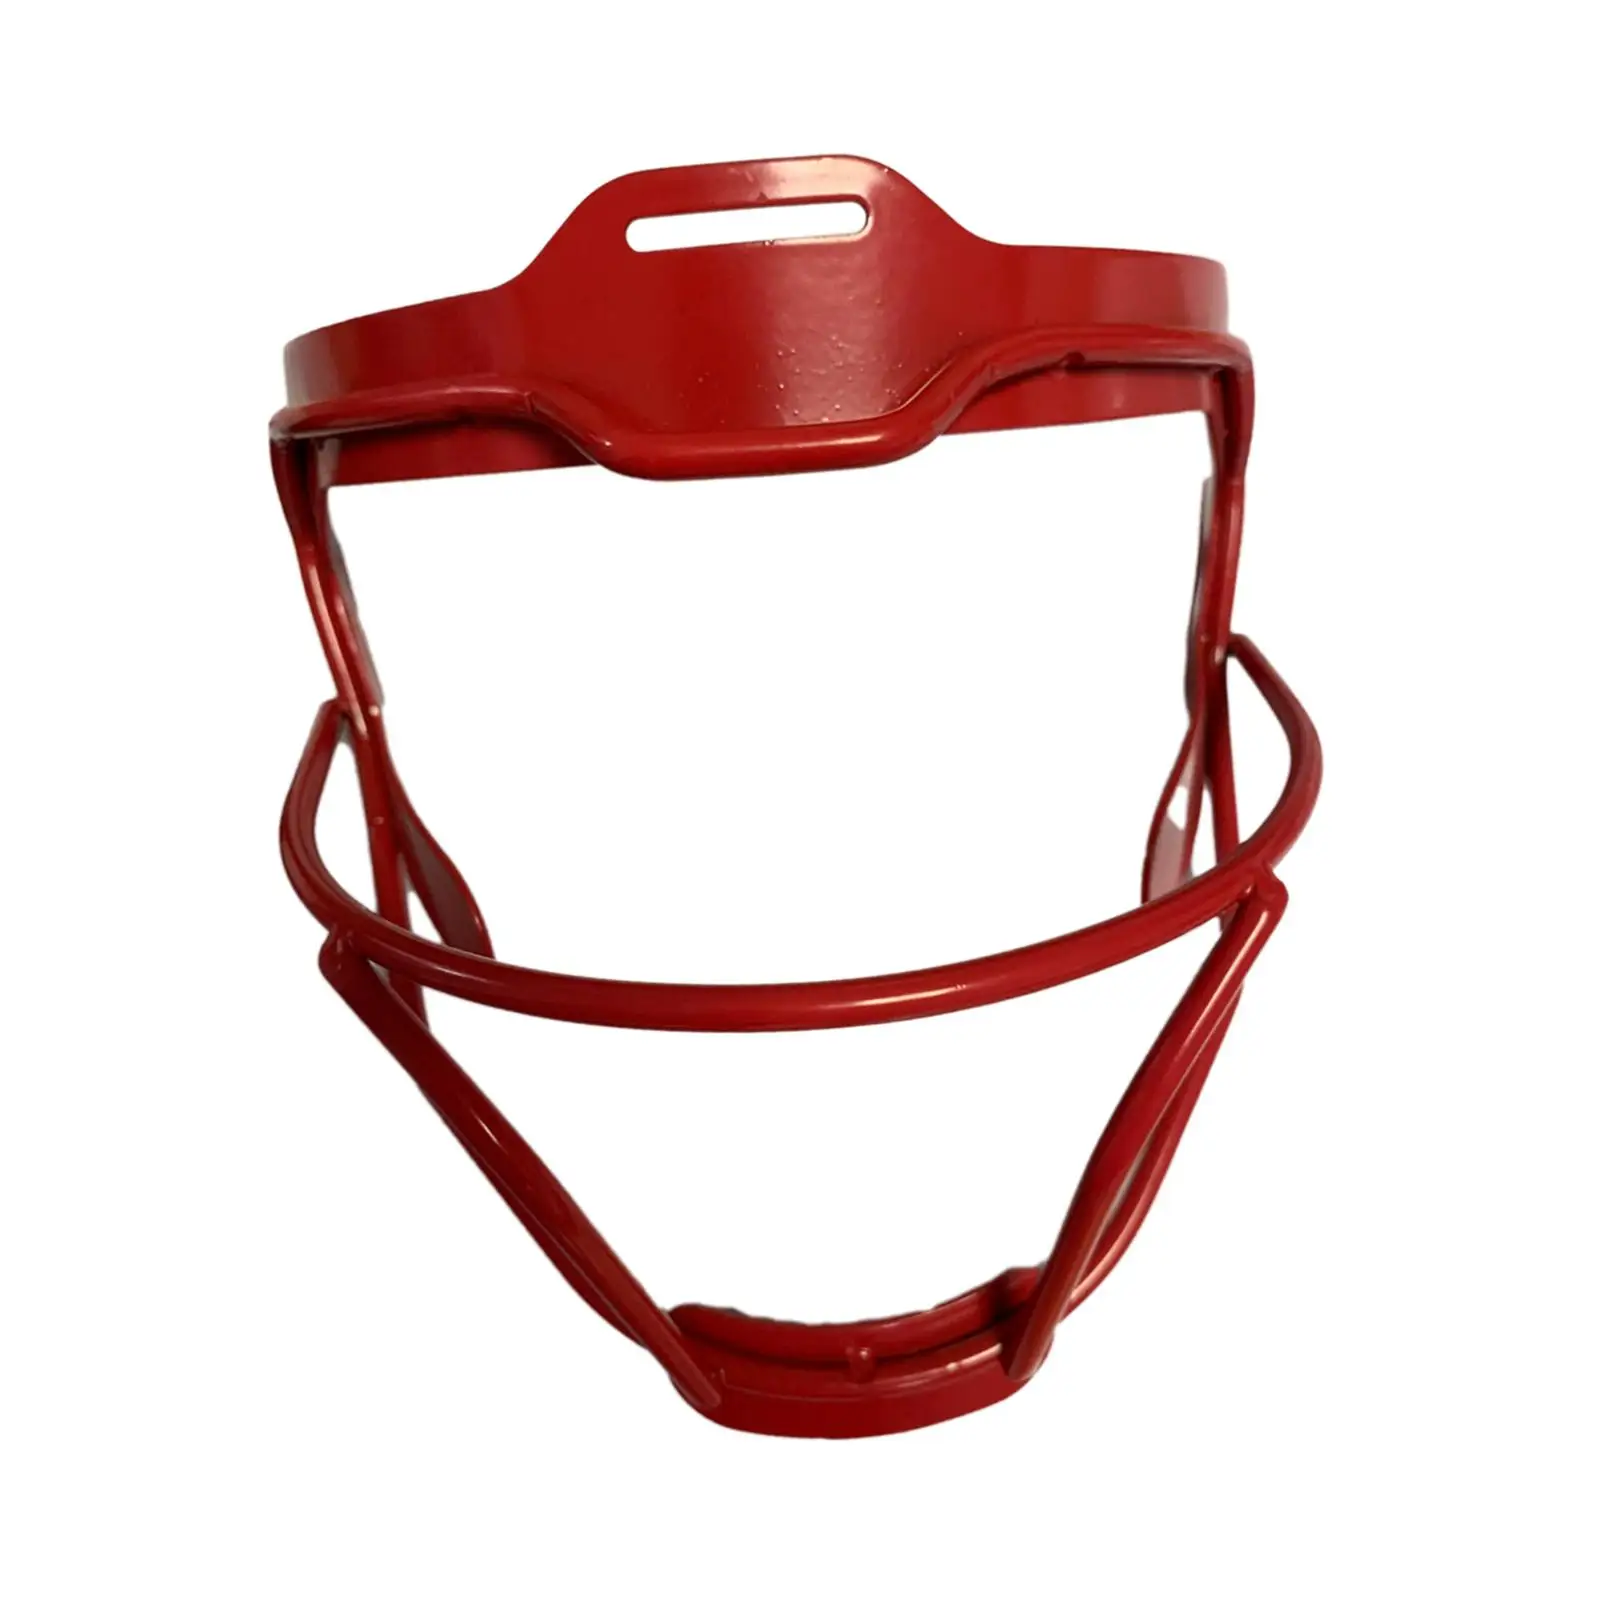 Universal Softball Batting Mask Face Guards Iron Wire Protective Shield